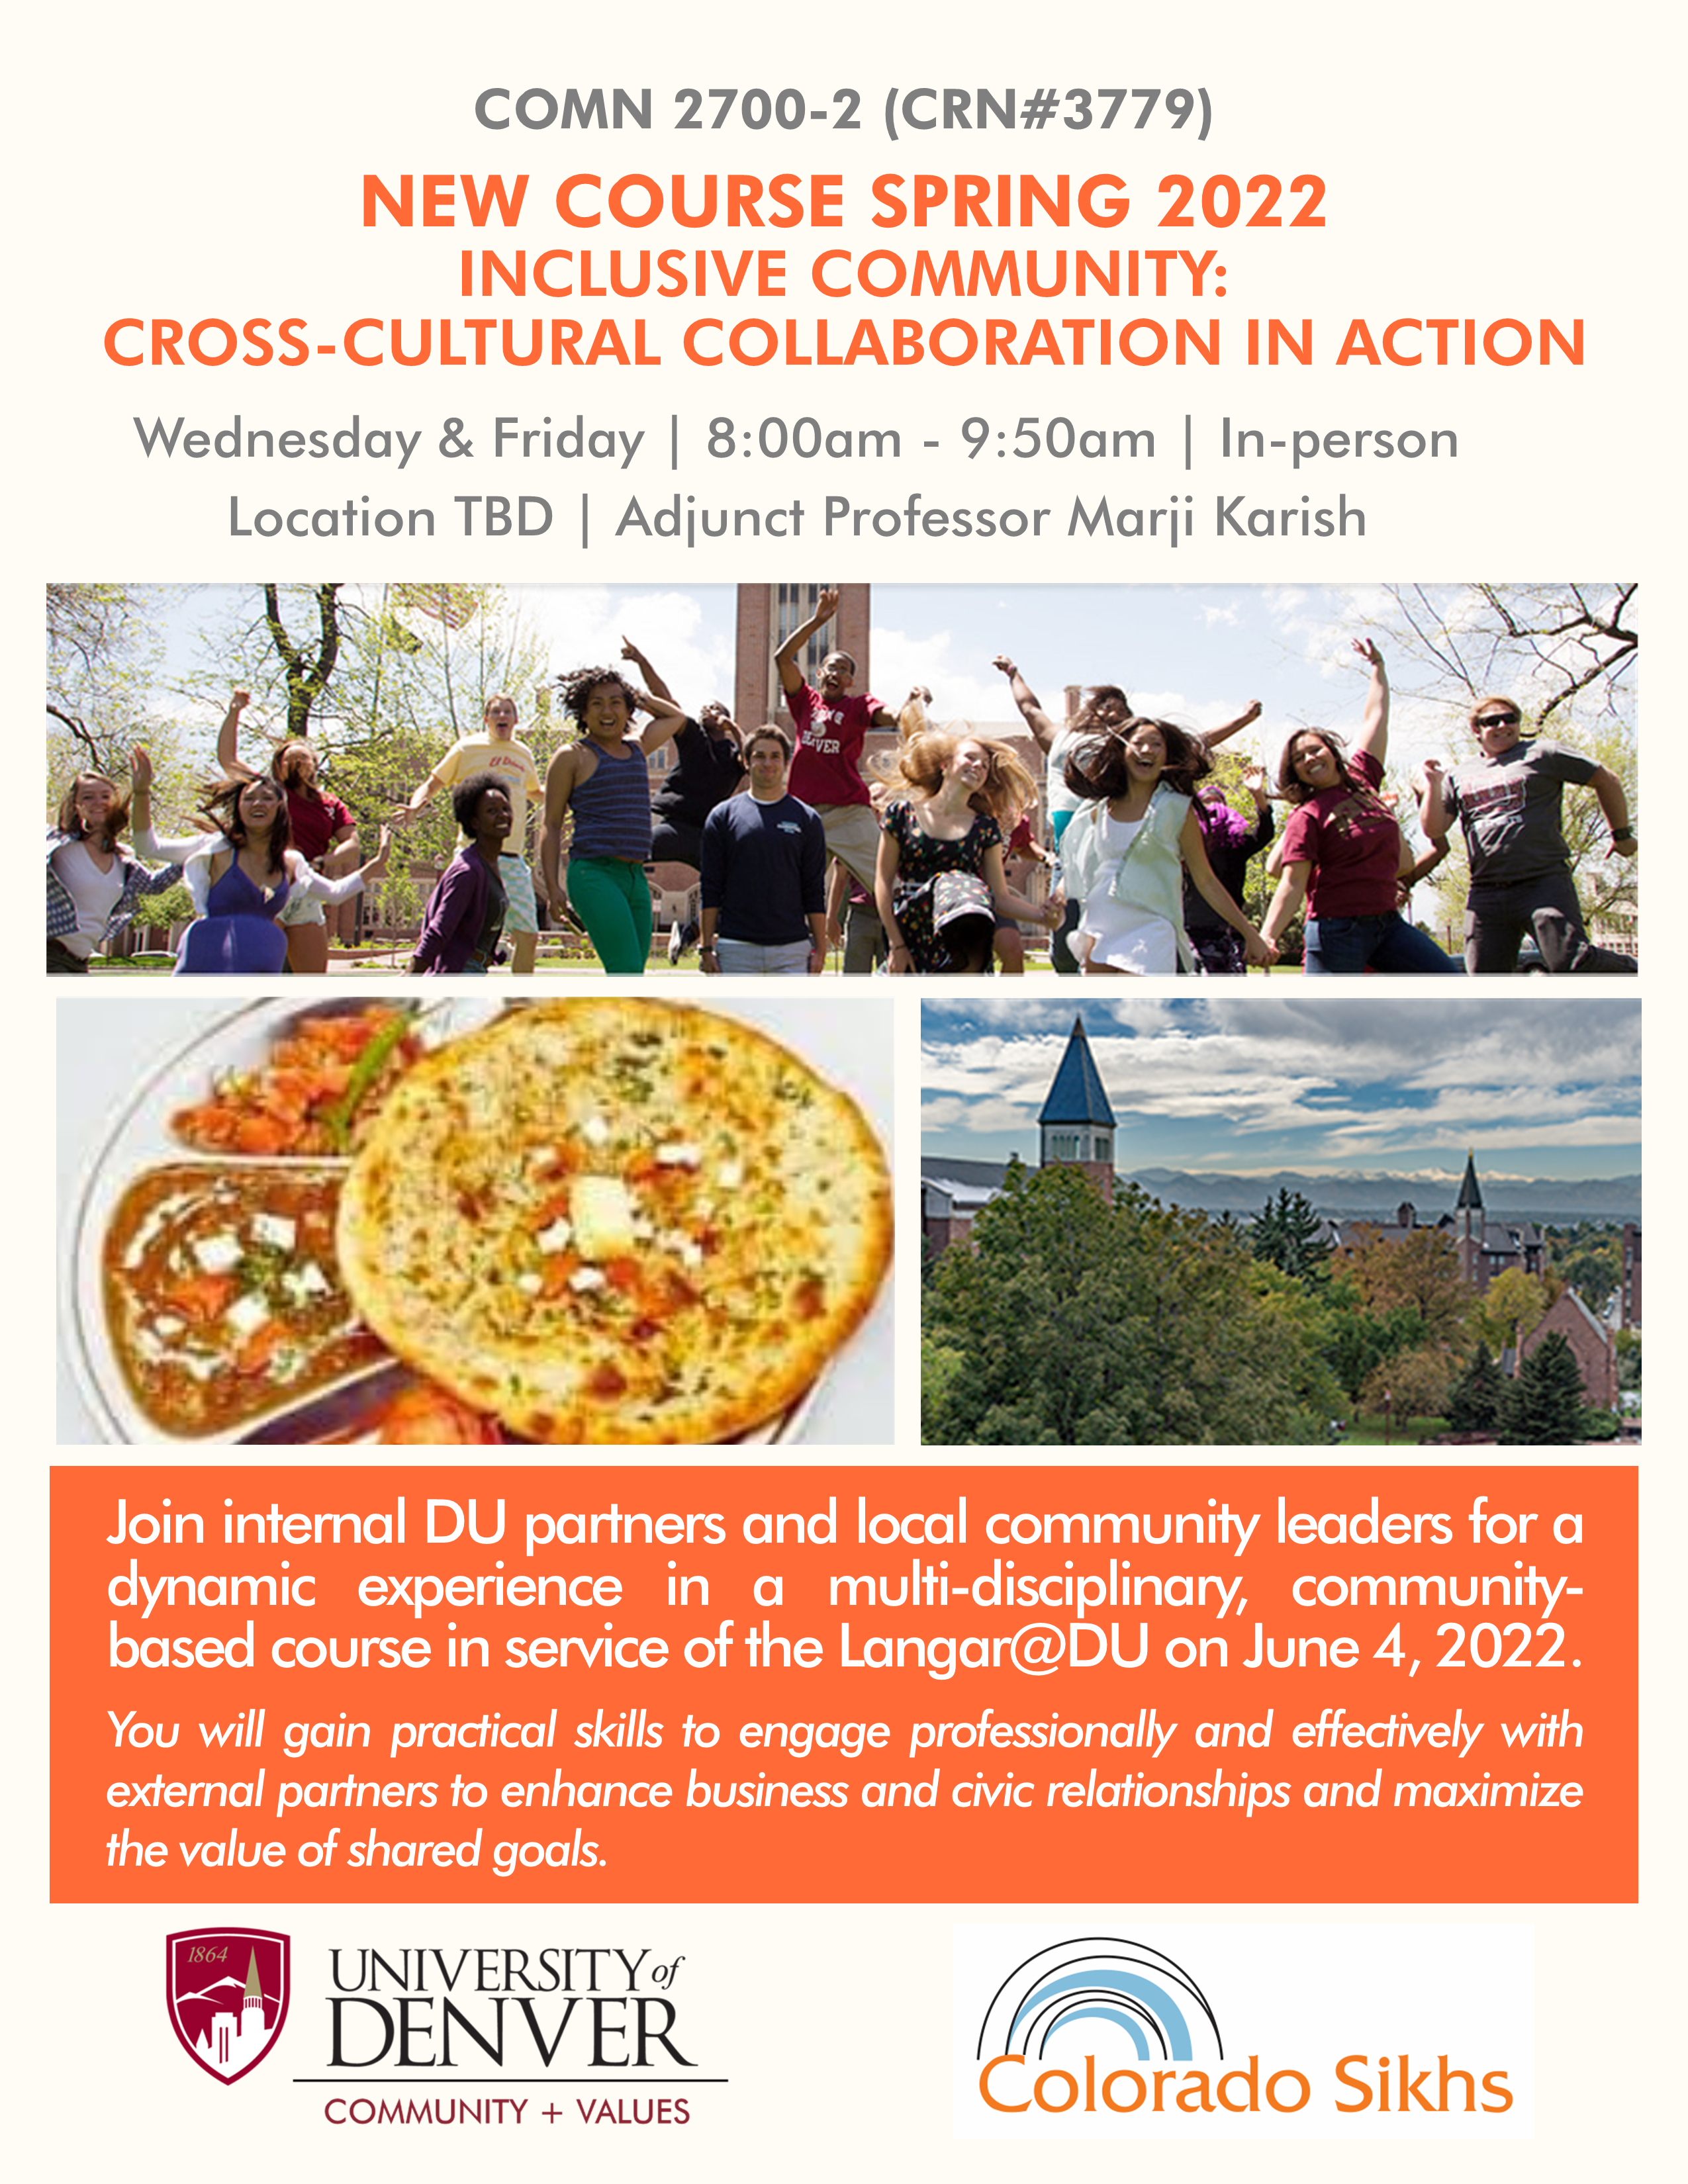 COMN 2700-5: Building Unity Through Communication: Establishing Cross-Cultural Connection (CRN 5814)